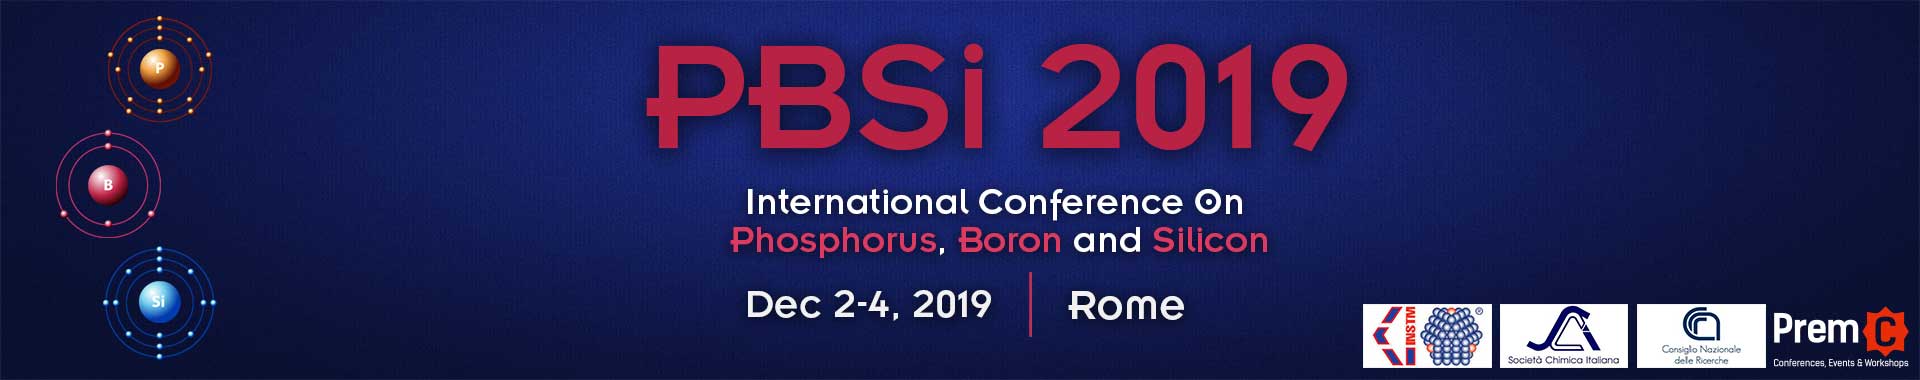 International Conference On Phosphorus, Boron And Silicon - PBSI 2017